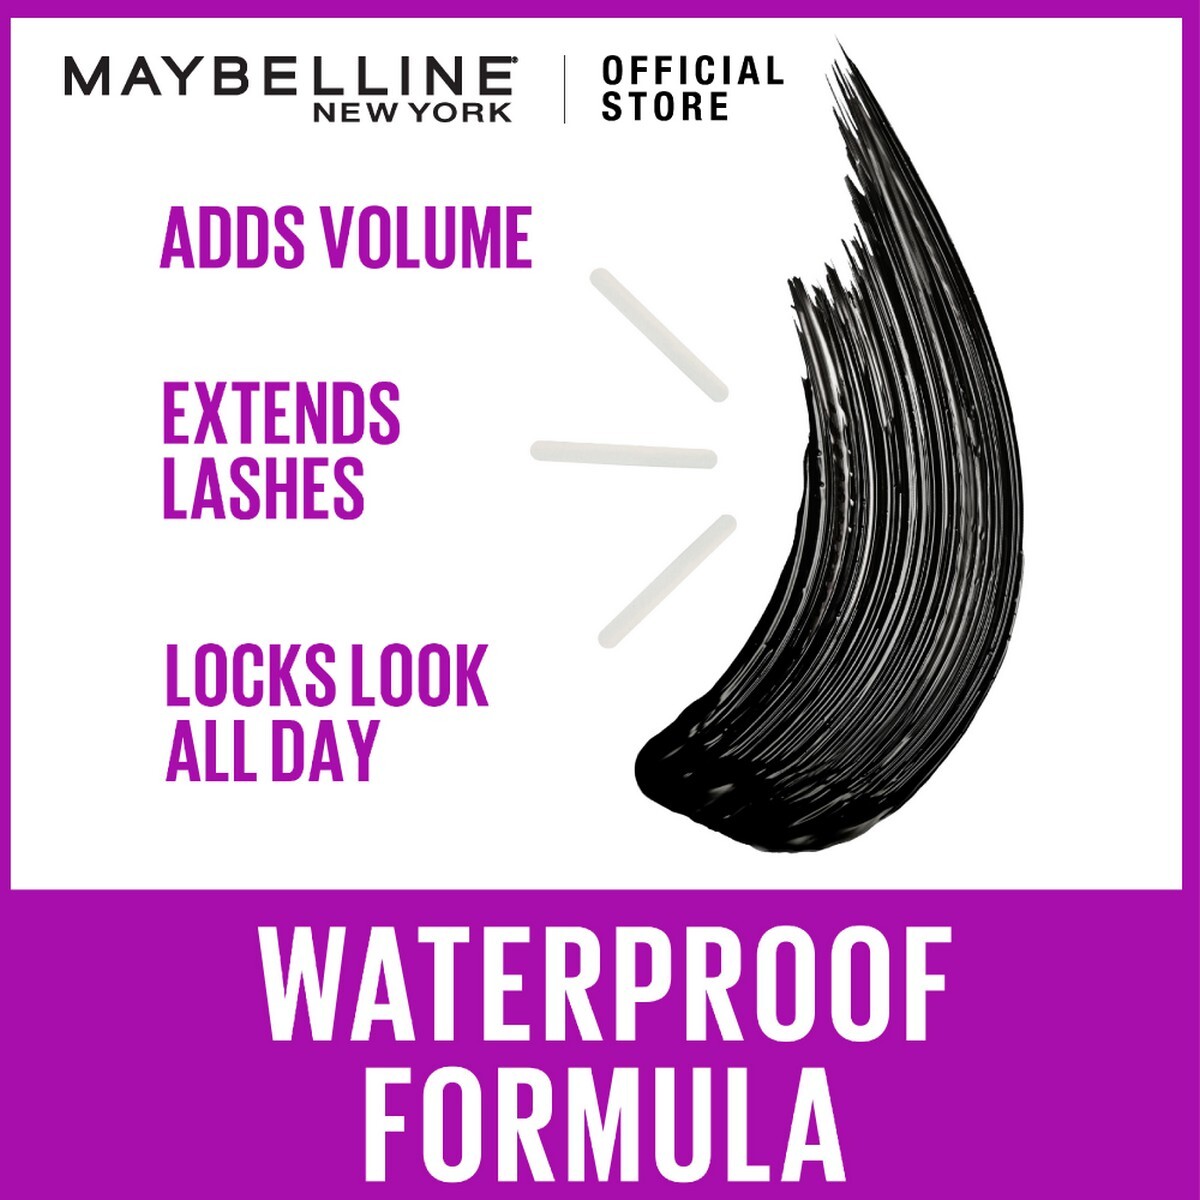 Maybelline New York's Lash Lift Mascara (Waterproof), 8.6 g